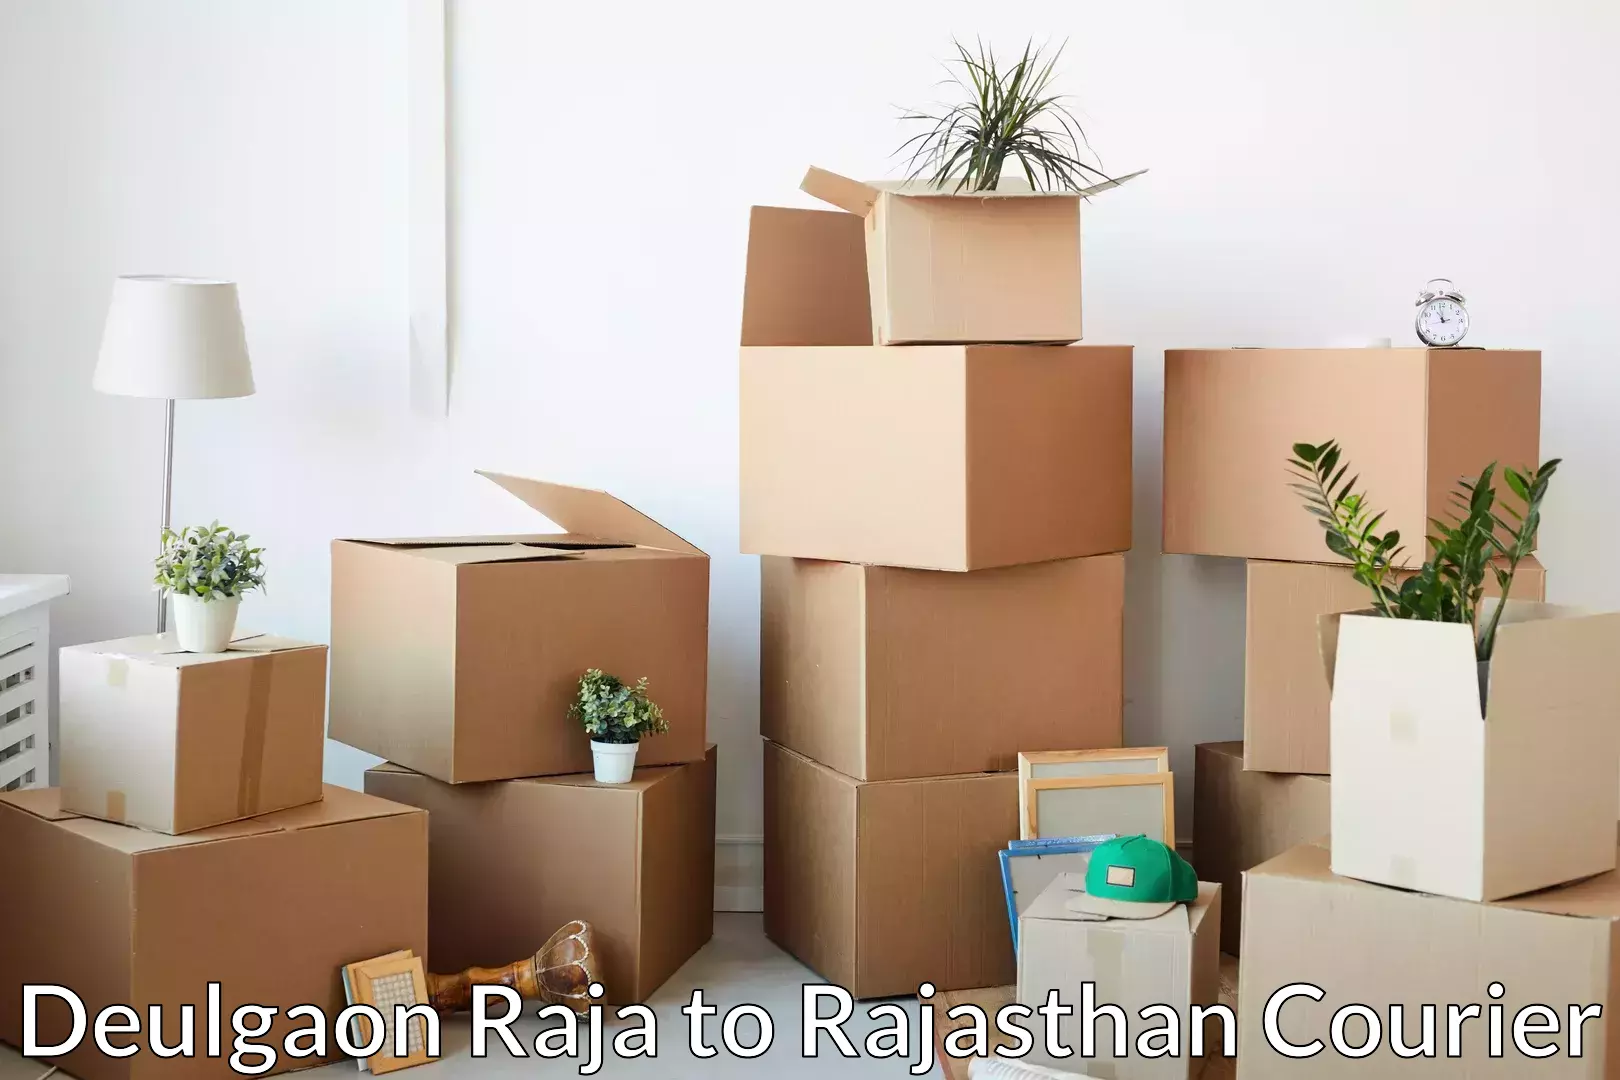 Furniture delivery service Deulgaon Raja to Tarnau